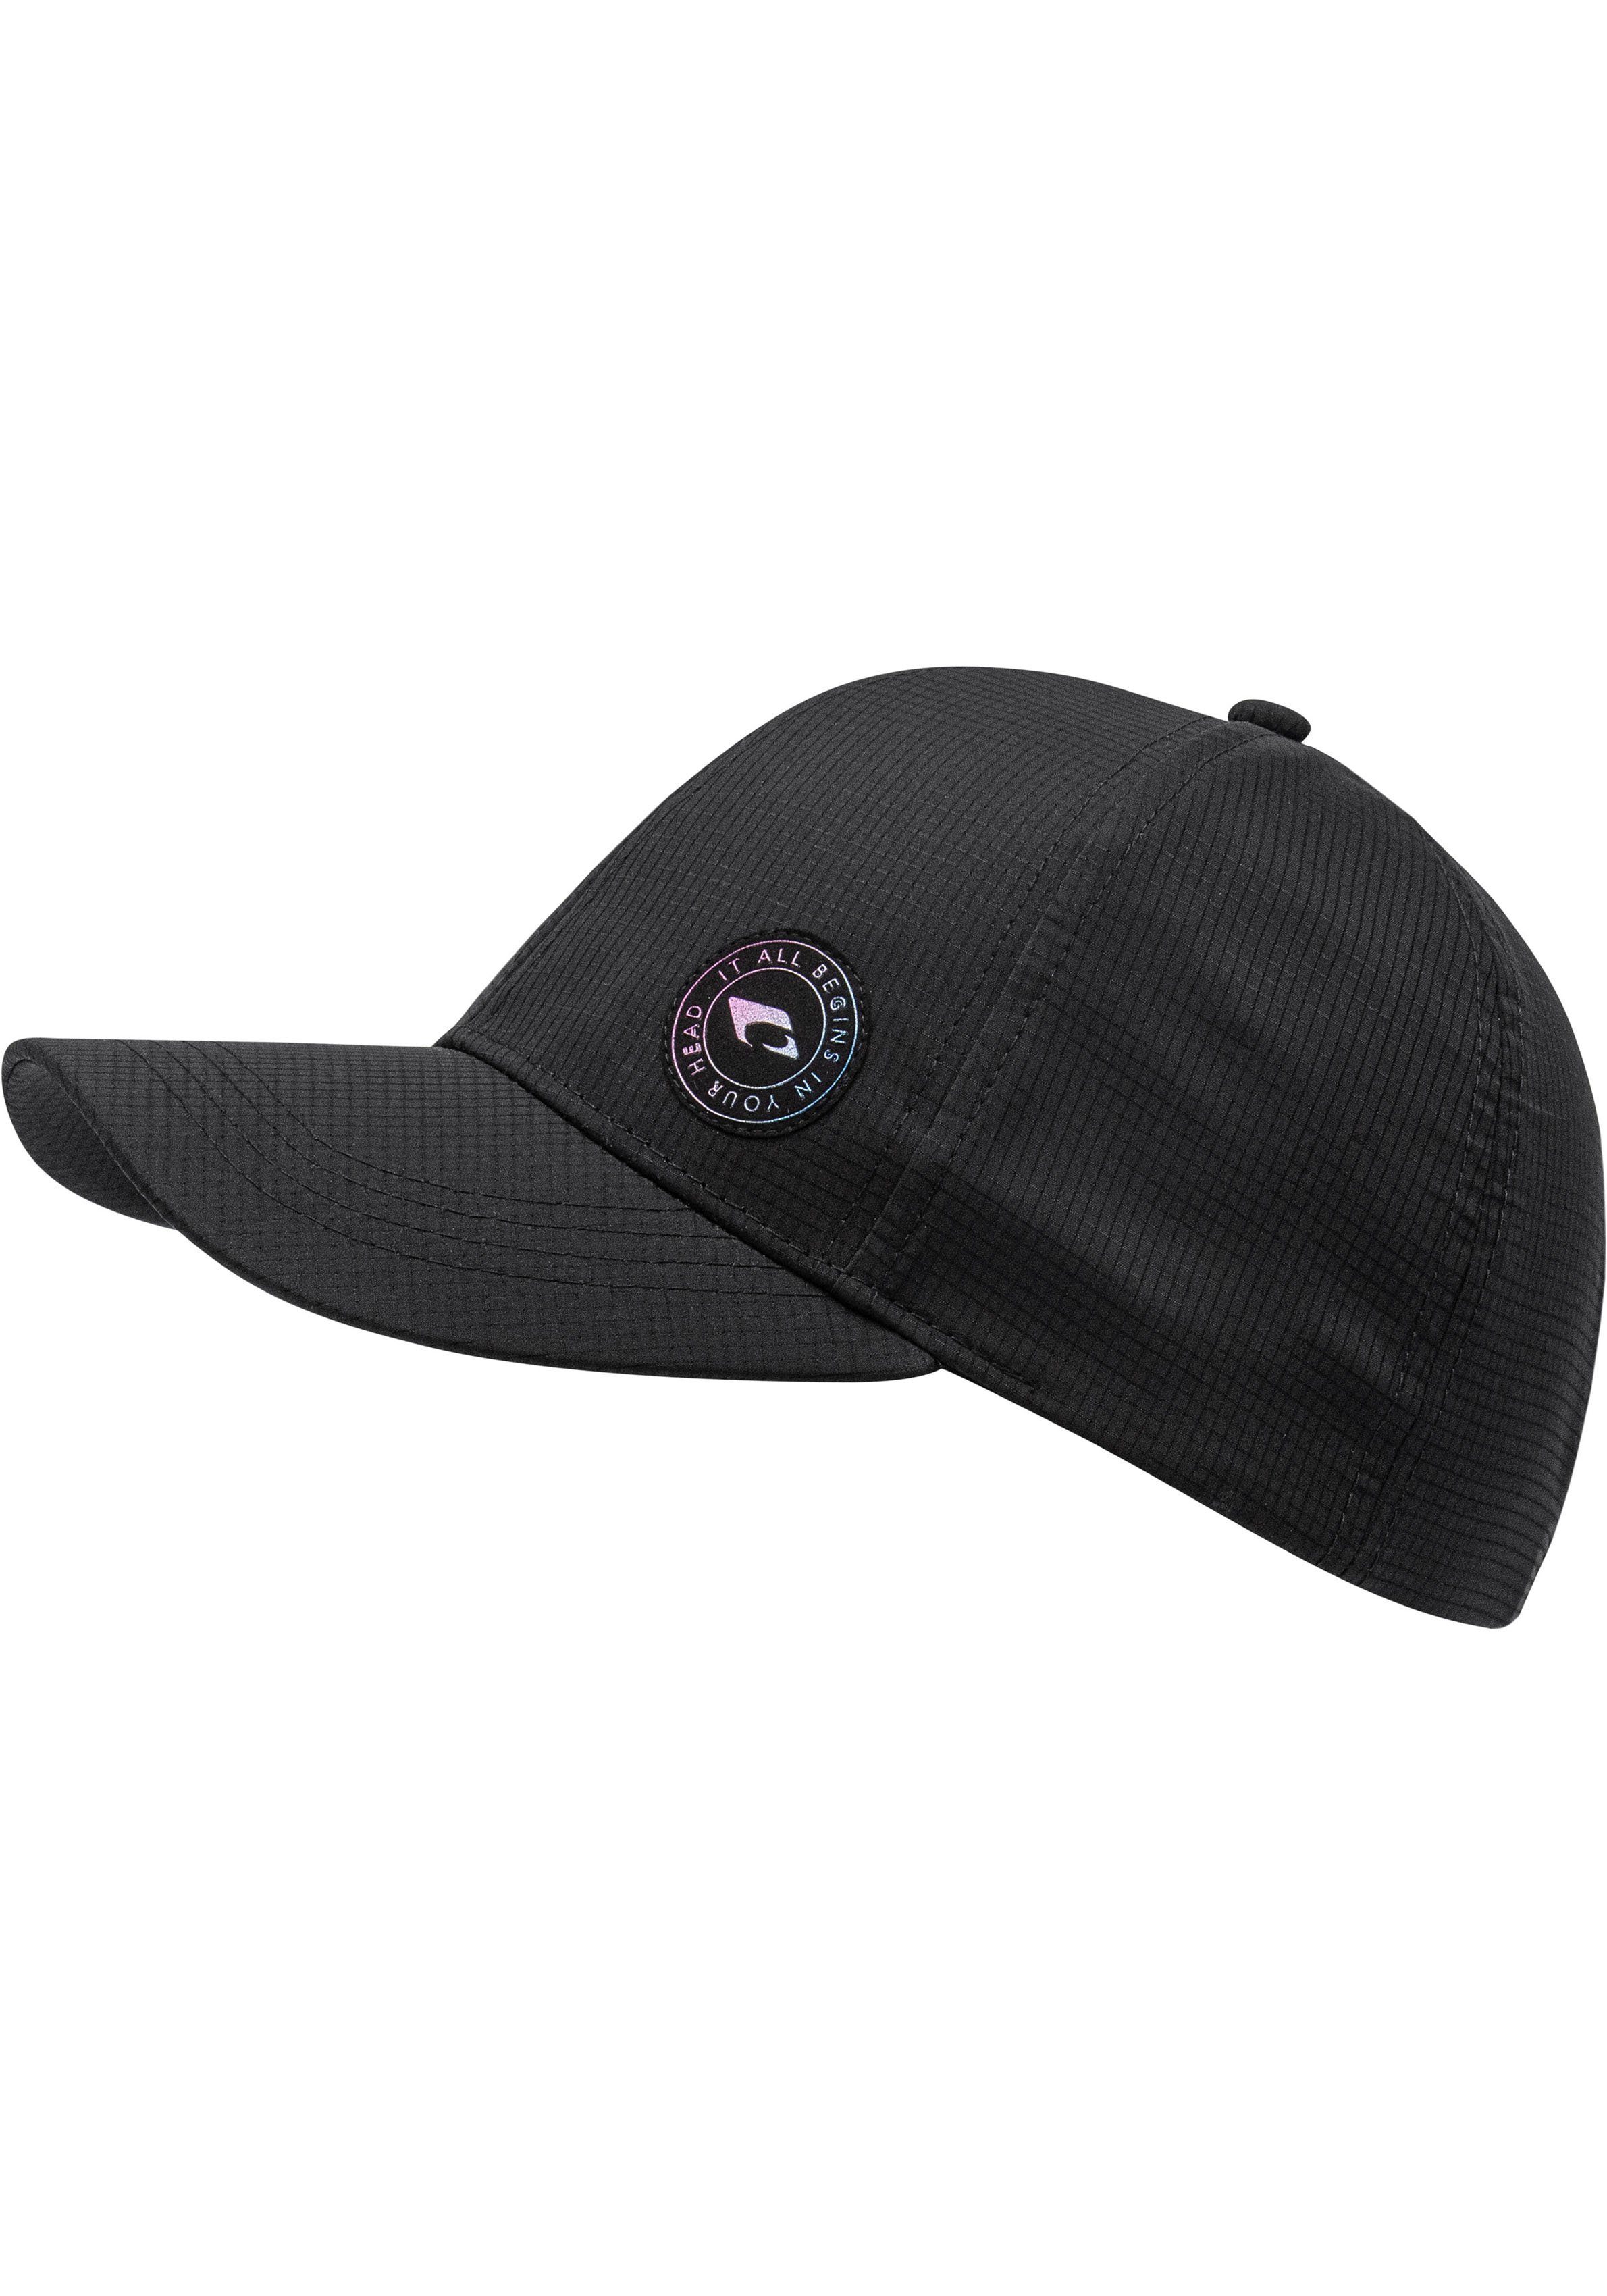 chillouts Langley Baseball Cap schwarz Hat